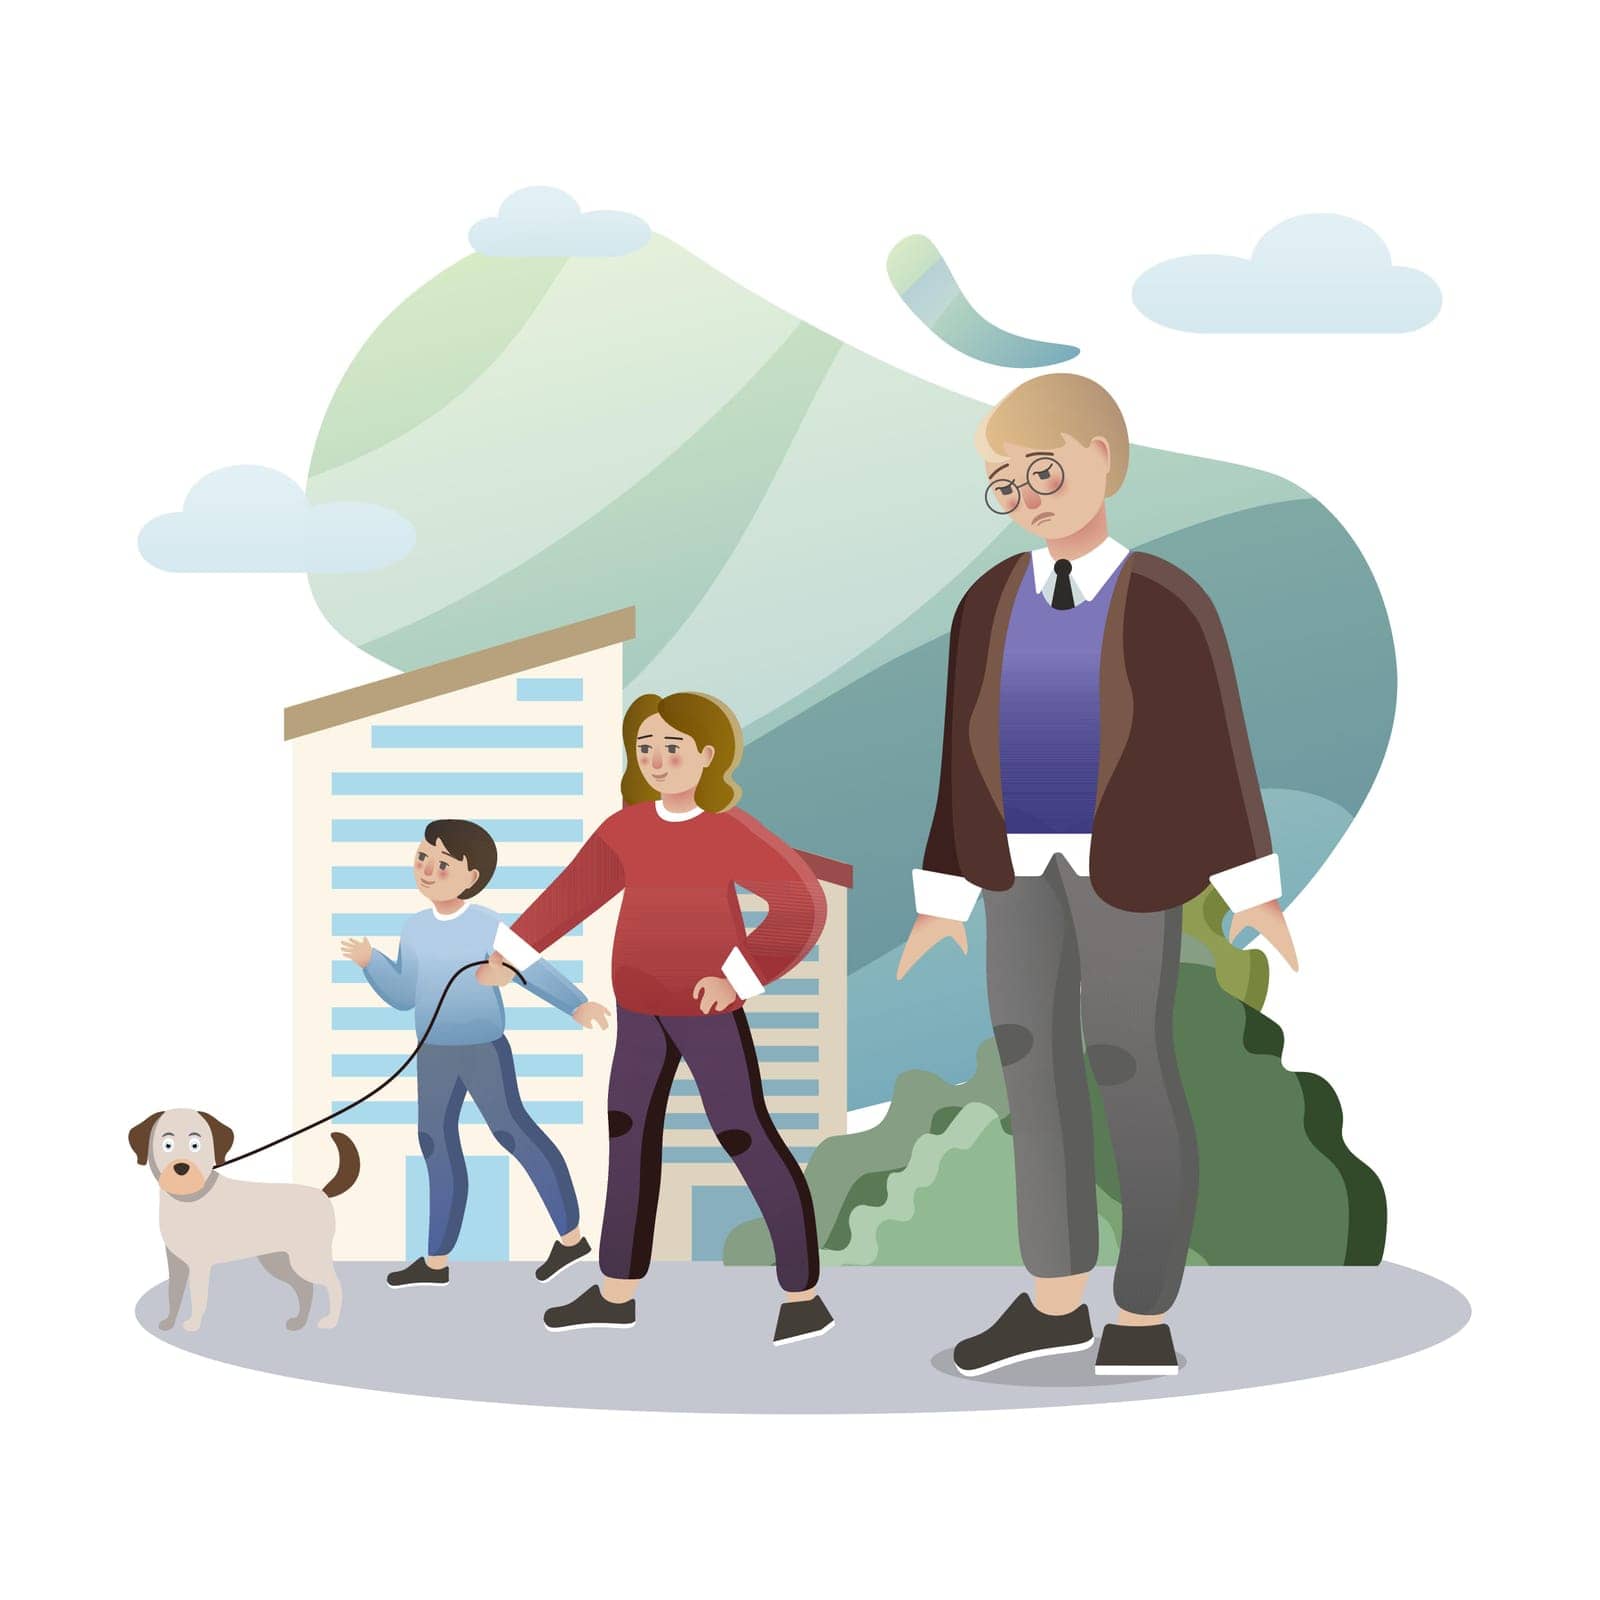 Loneliness illustration. Boy, dog, woman, building. Creative editable vector graphic design.